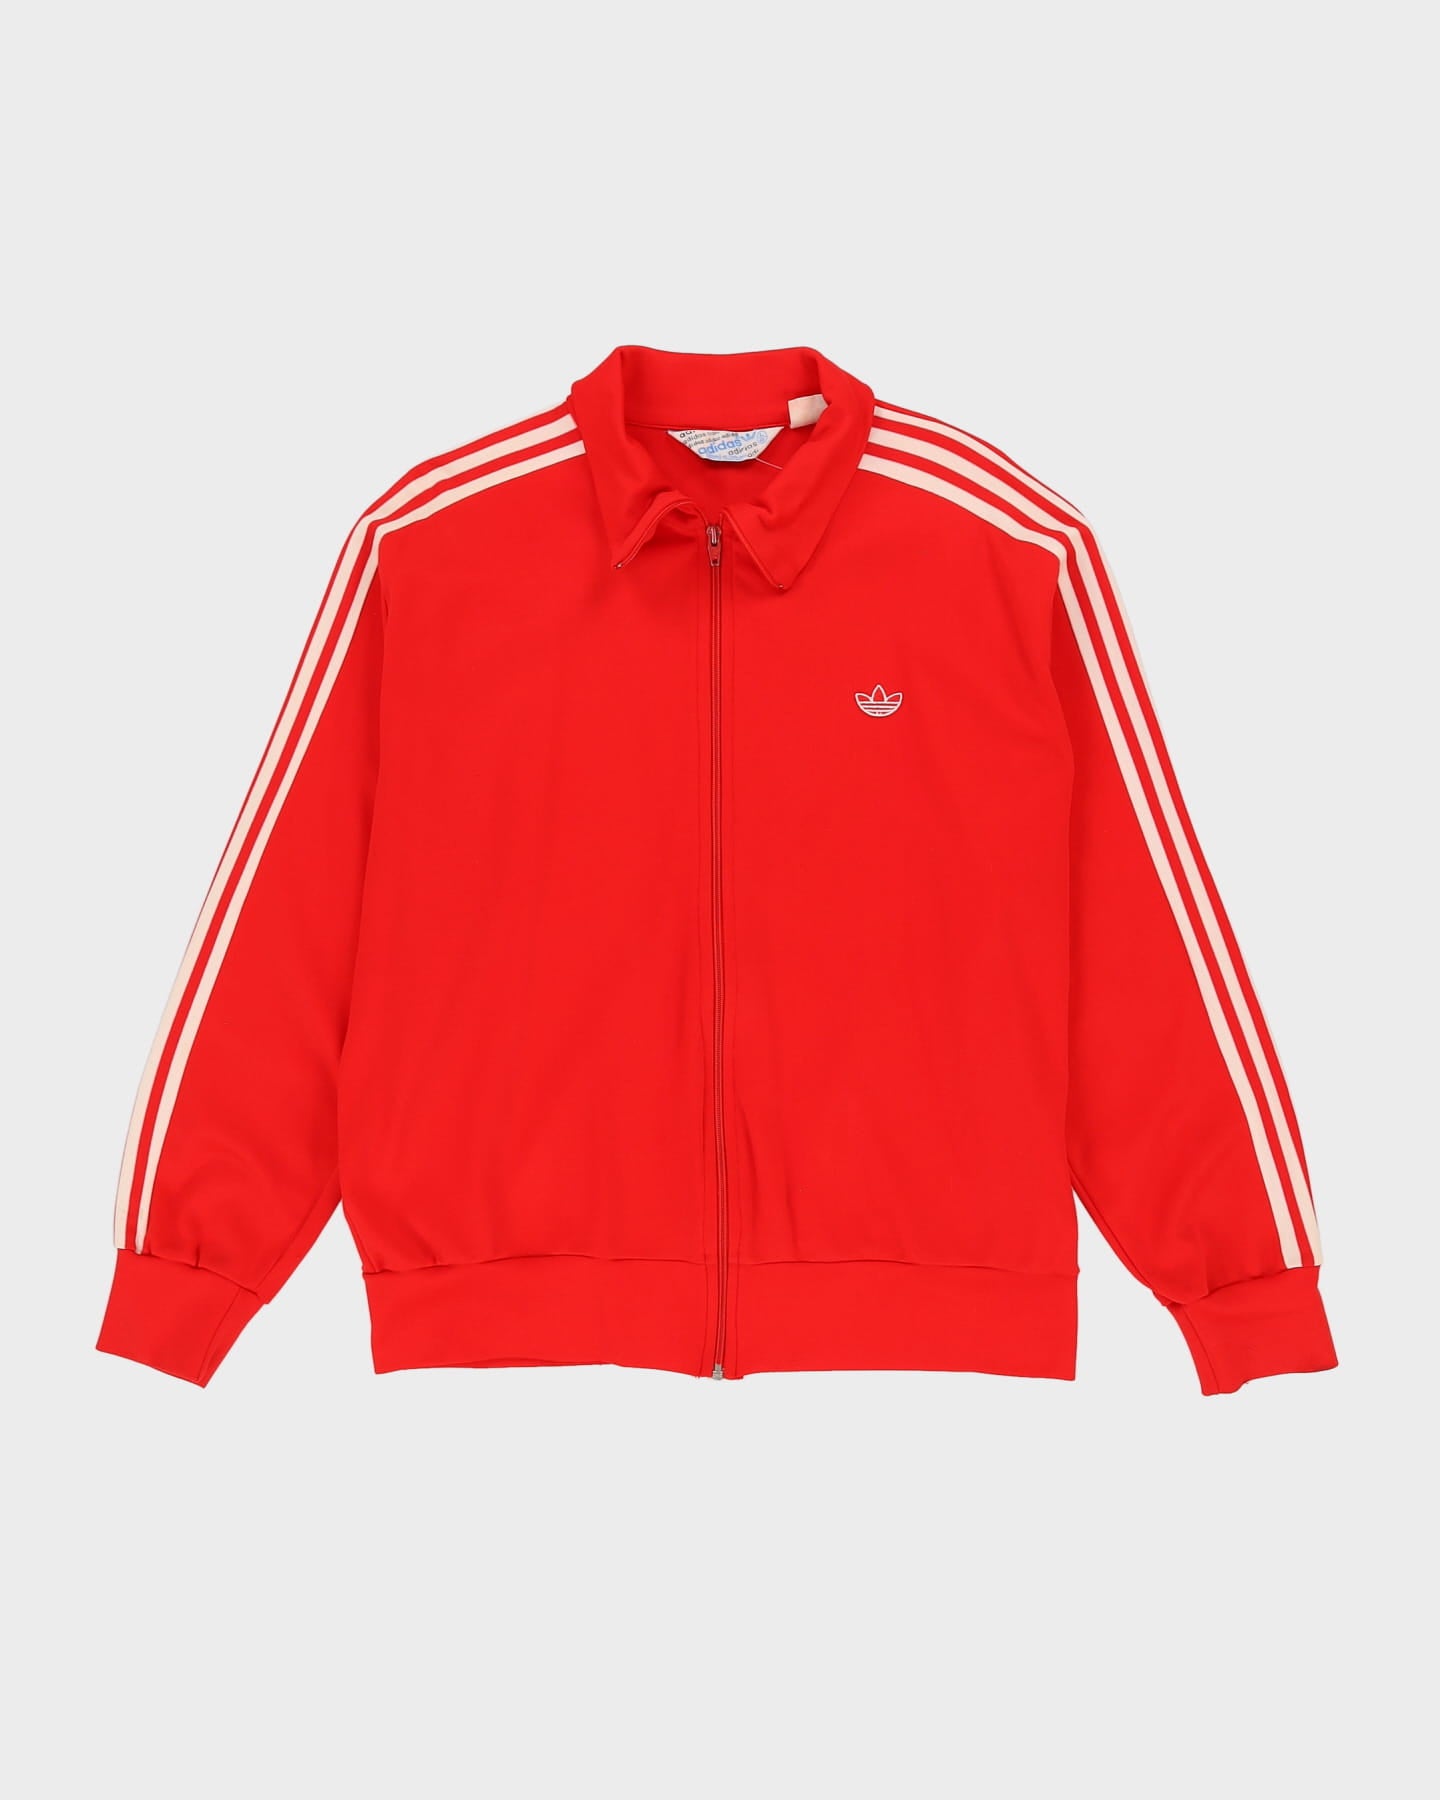 Vintage 90s Adidas Red Track Jacket - L